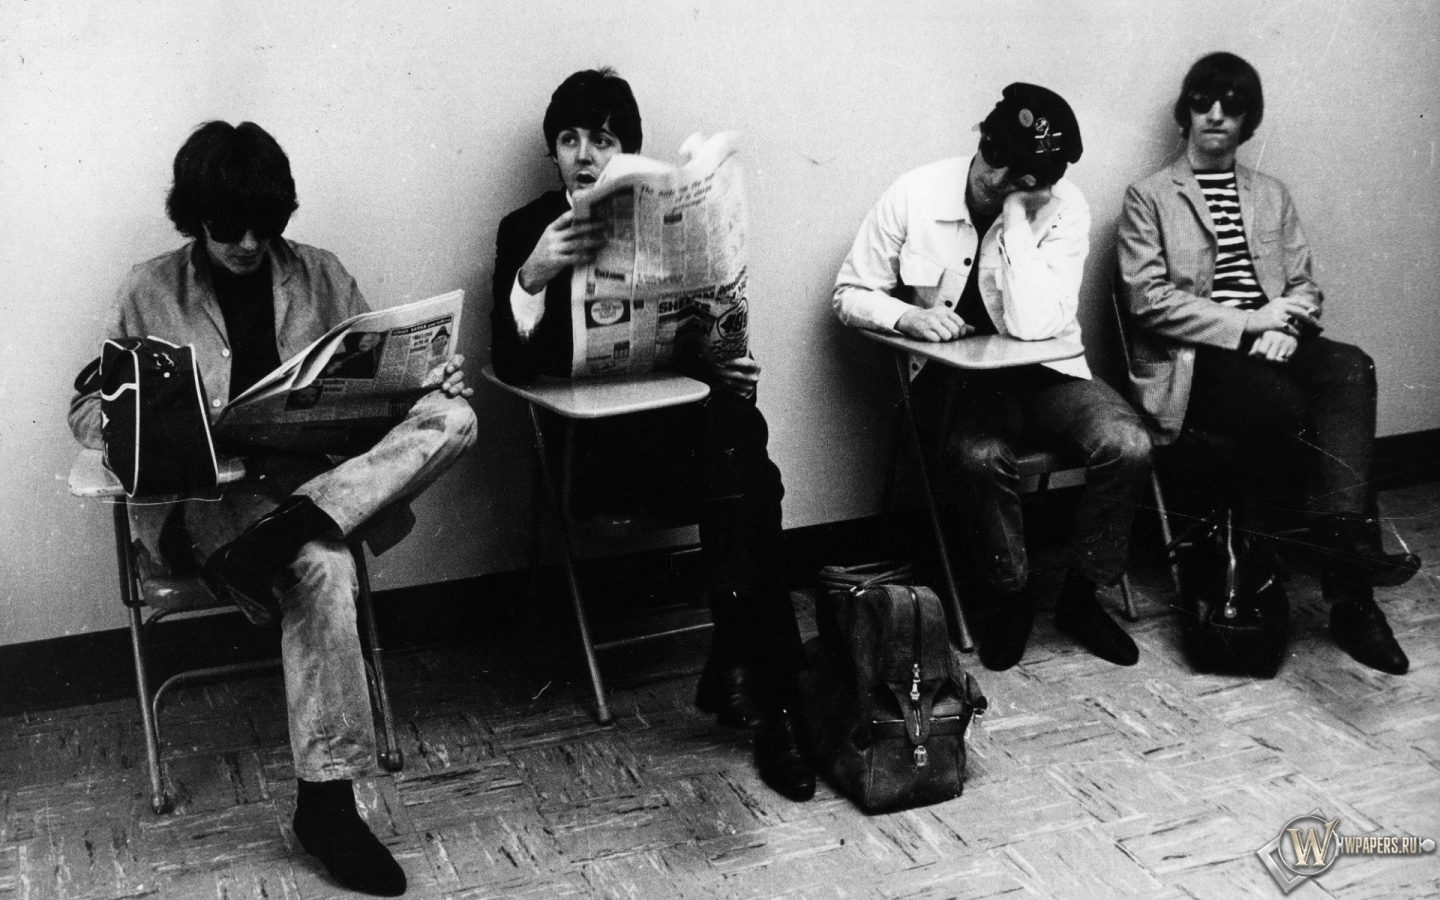 The Beatles 1440x900